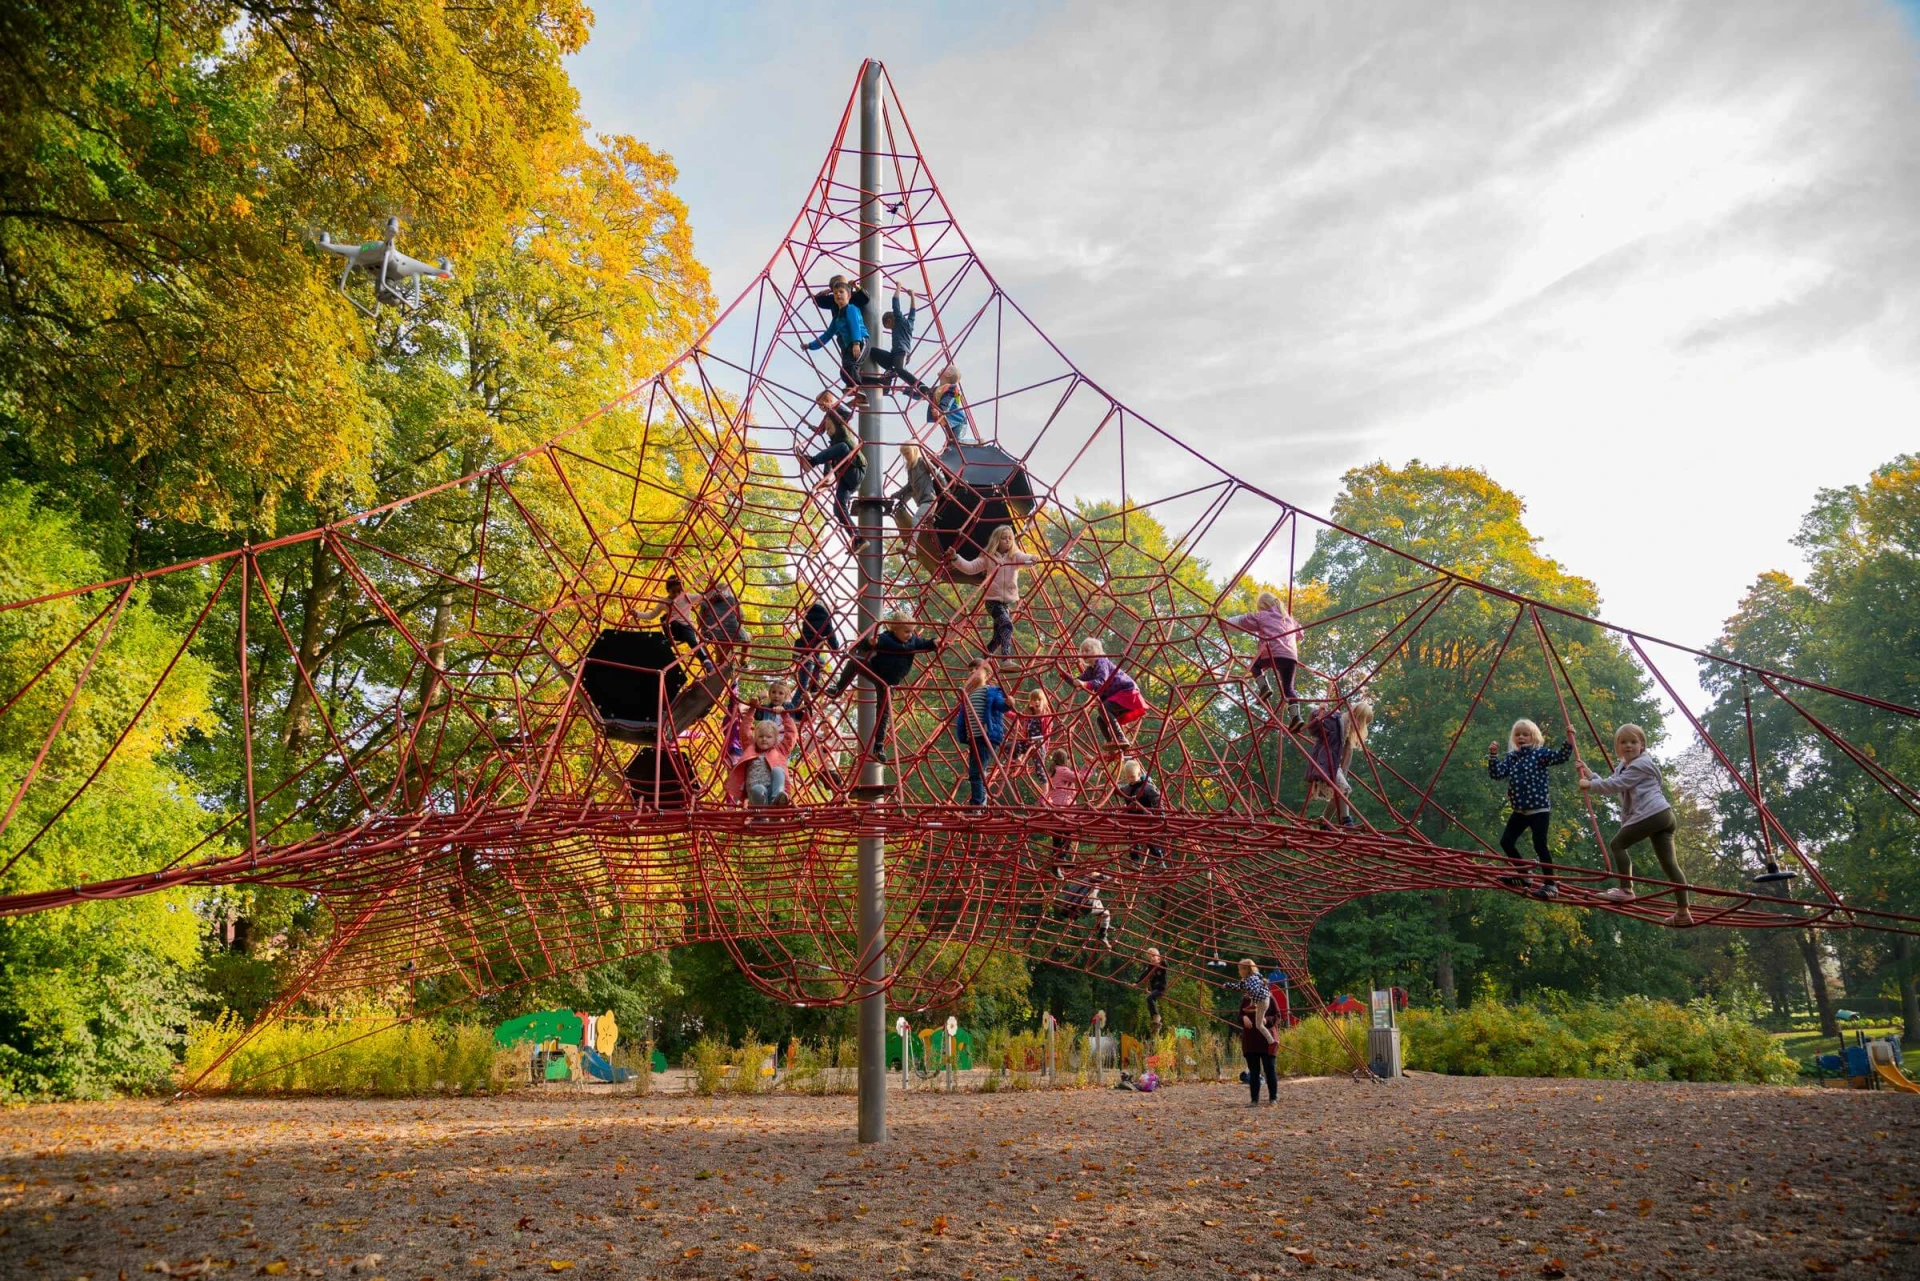 Children climbing in large playground spacenet at Egeskov Castle